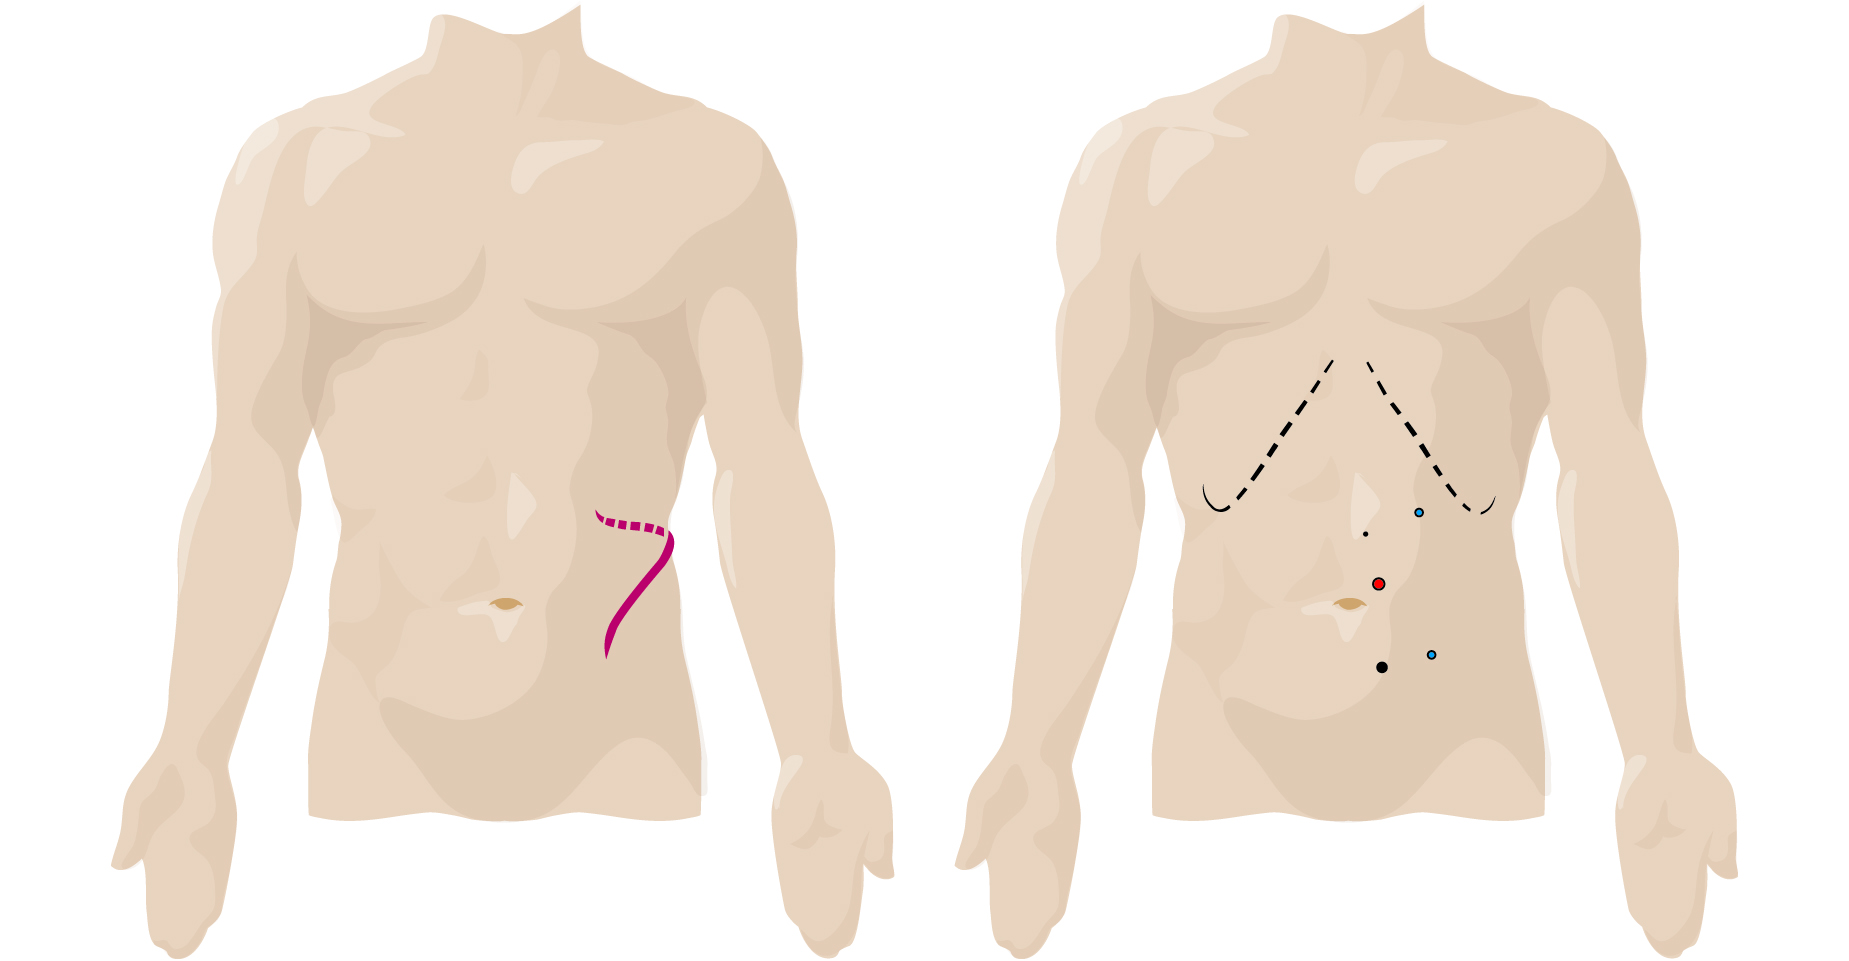 Nephrectomy: open surgical incision vs laparoscopic incision